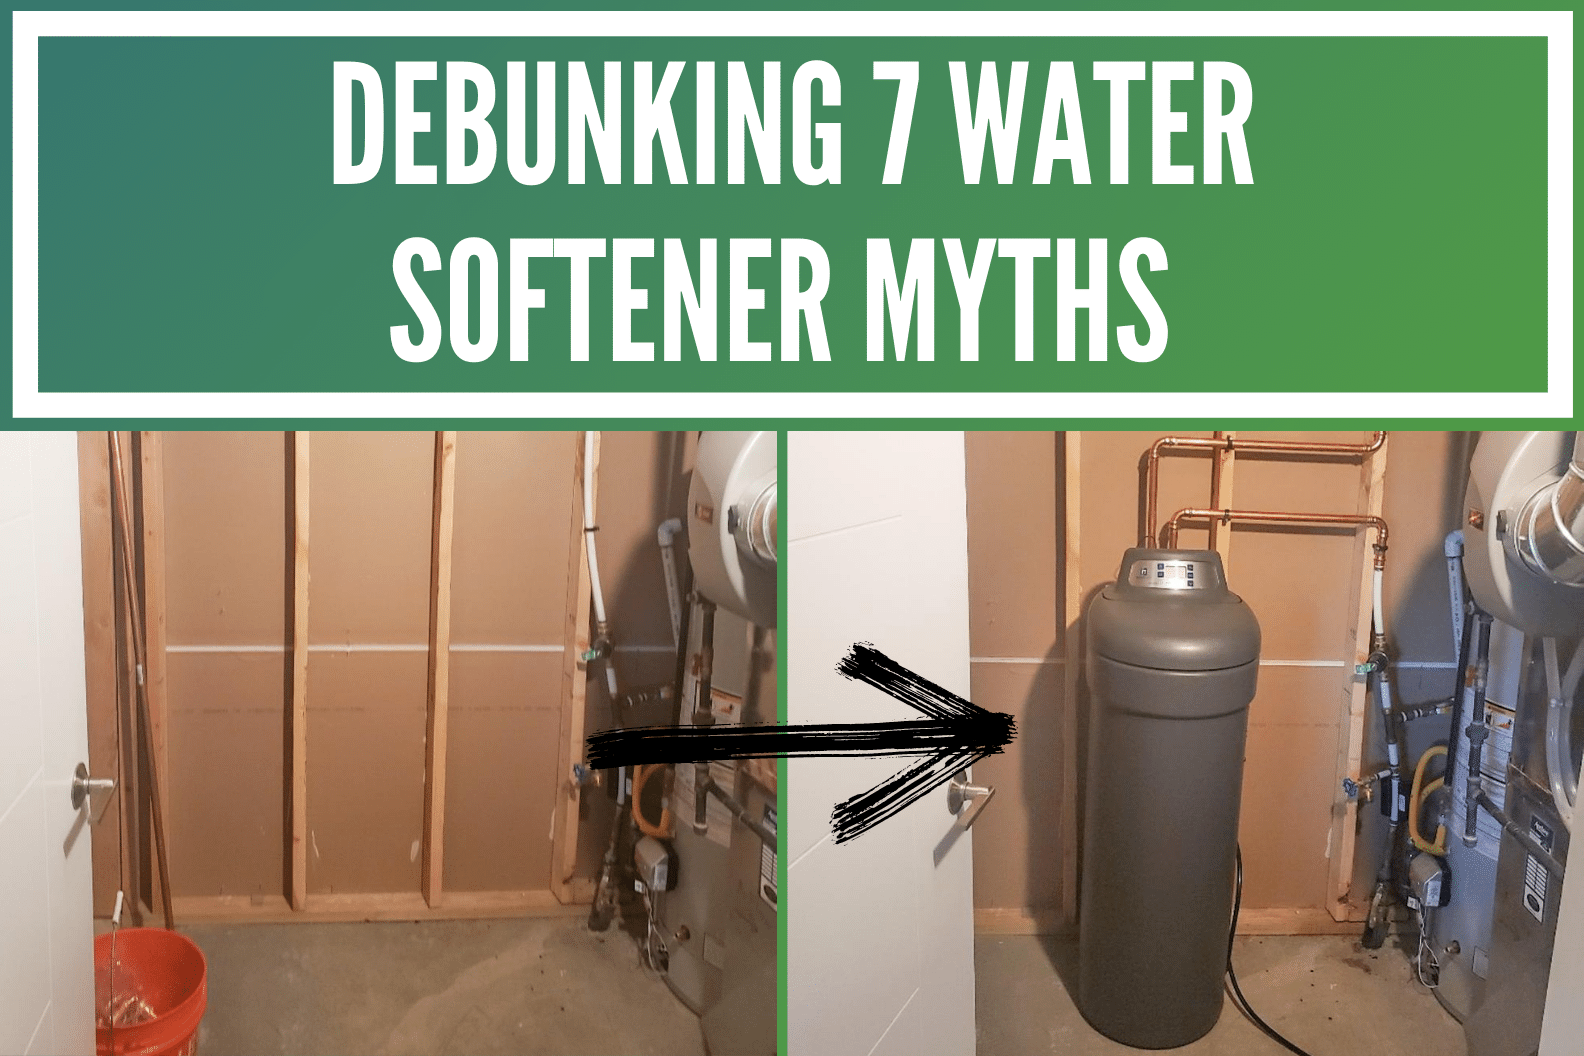 Water Softener myths